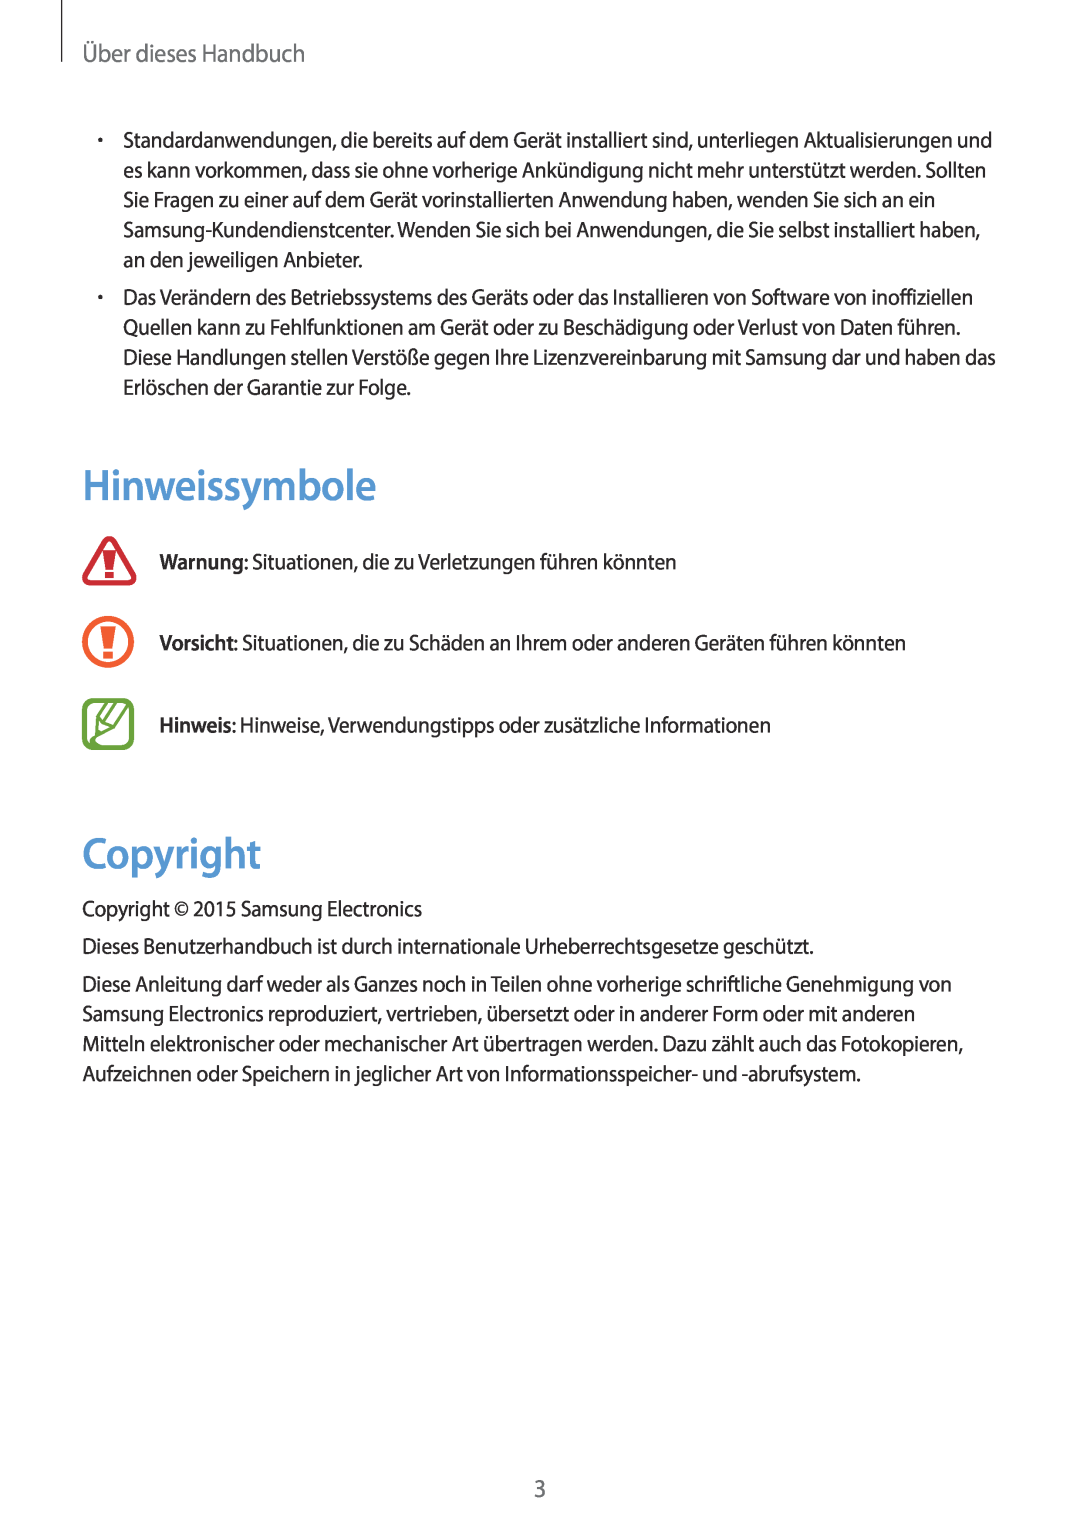 Samsung SM-N9005ZWETCL, SM-N9005ZKEXEO, SM-N9005ZWEVD2, SM-N9005ZWETMN manual Hinweissymbole, Copyright, Über dieses Handbuch 